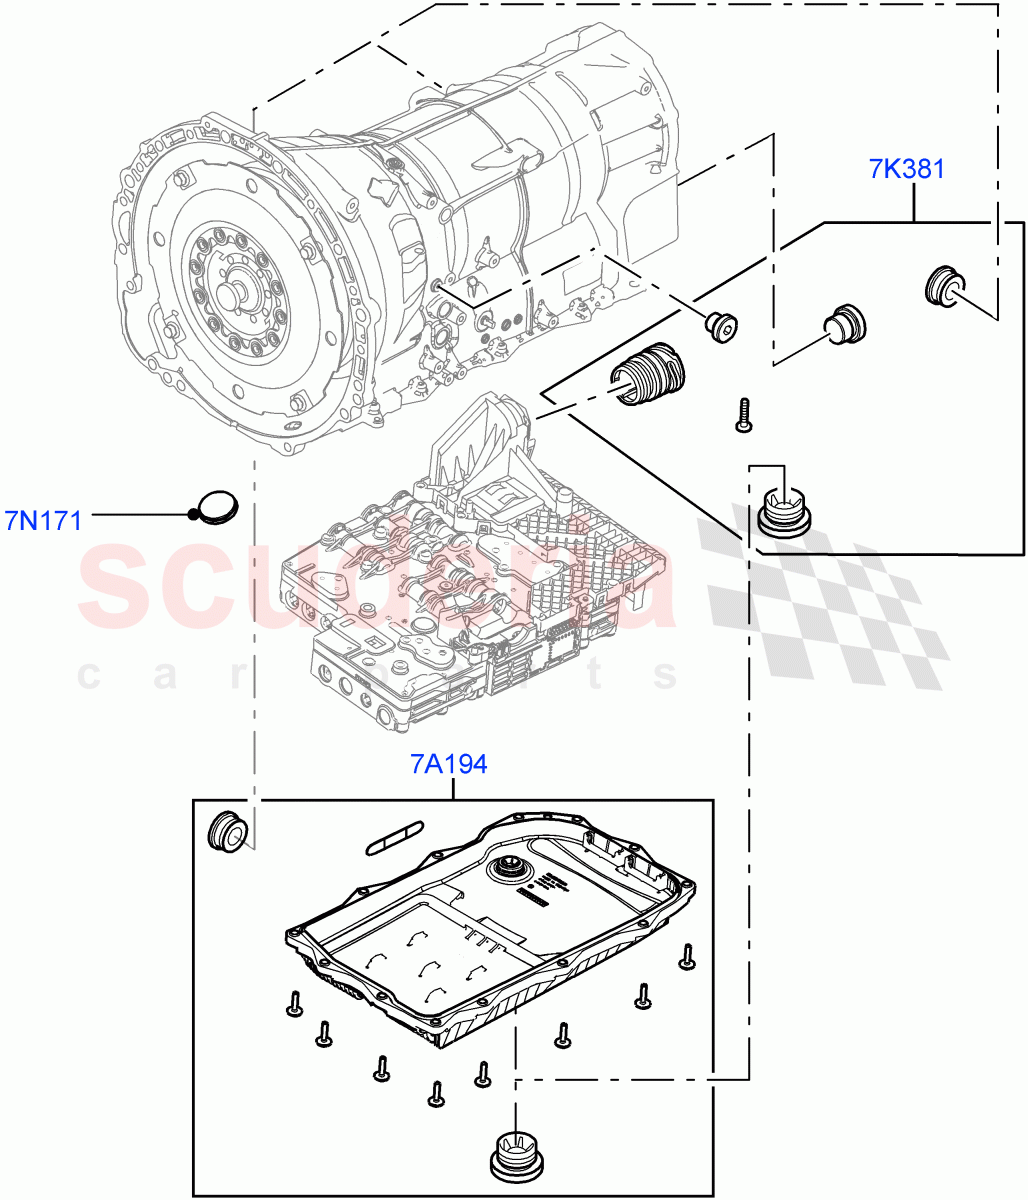 Transmission External Components(Nitra Plant Build)(2.0L I4 DSL HIGH DOHC AJ200,8 Speed Auto Trans ZF 8HP70 4WD,5.0 Petrol AJ133 DOHC CDA)((V)FROMK2000001) of Land Rover Land Rover Defender (2020+) [3.0 I6 Turbo Diesel AJ20D6]